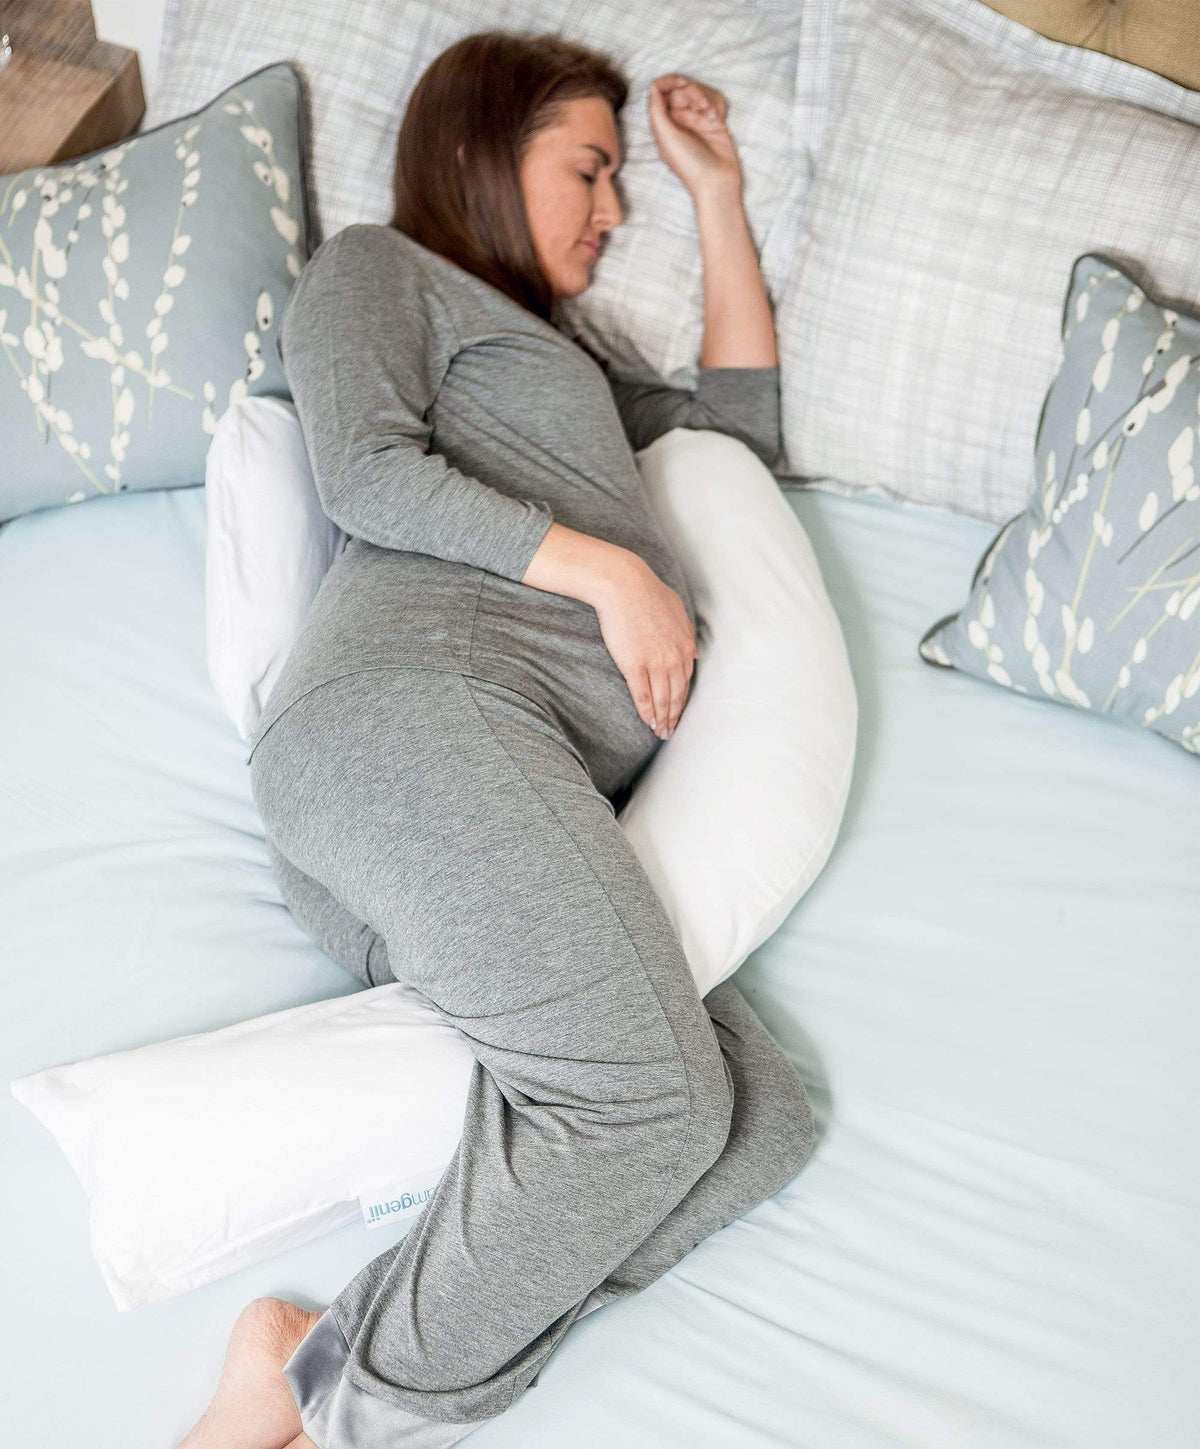 Dreamgenii Pregnancy Support Pillow White